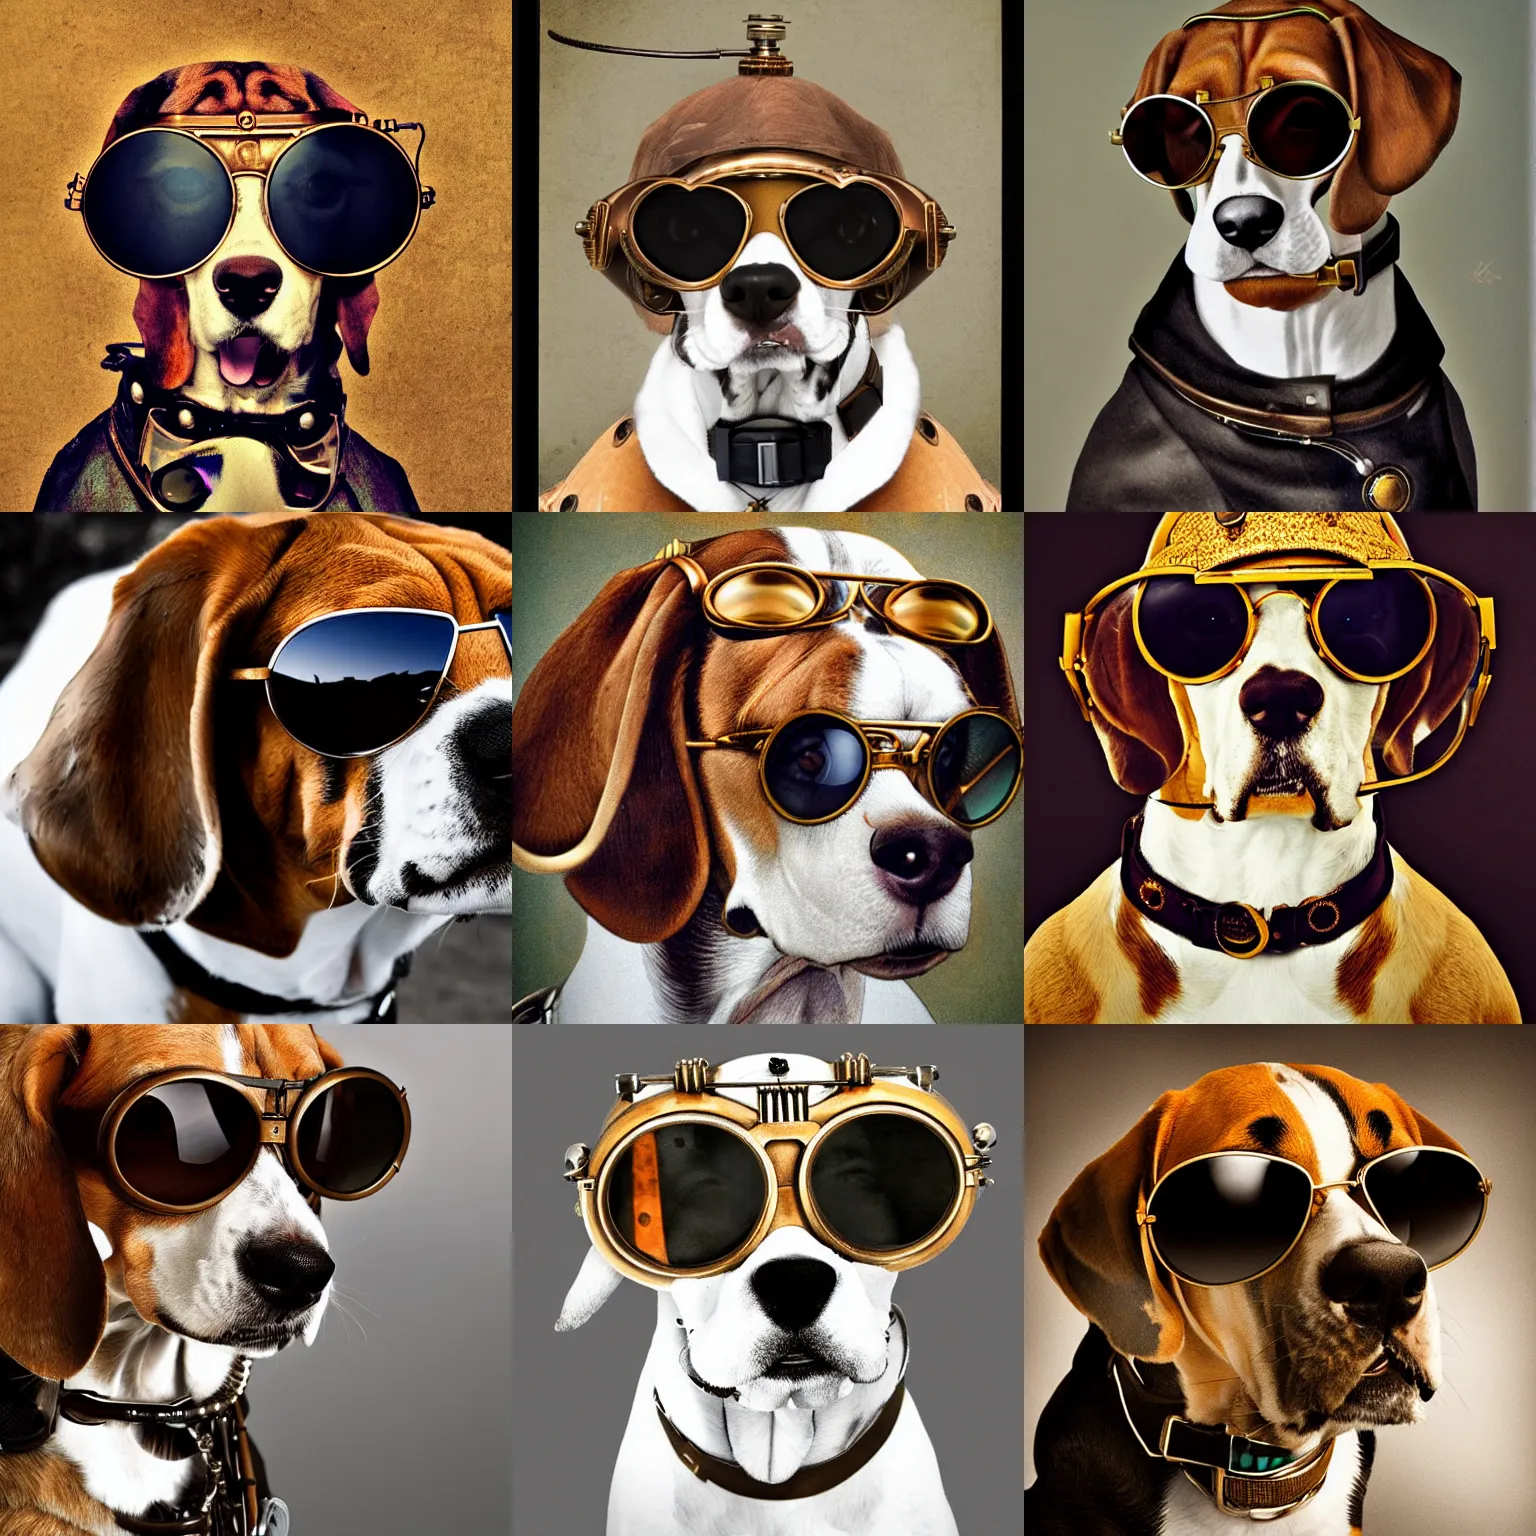 Prompt: sublime portrait of a beagle with sunglasses, steampunk era